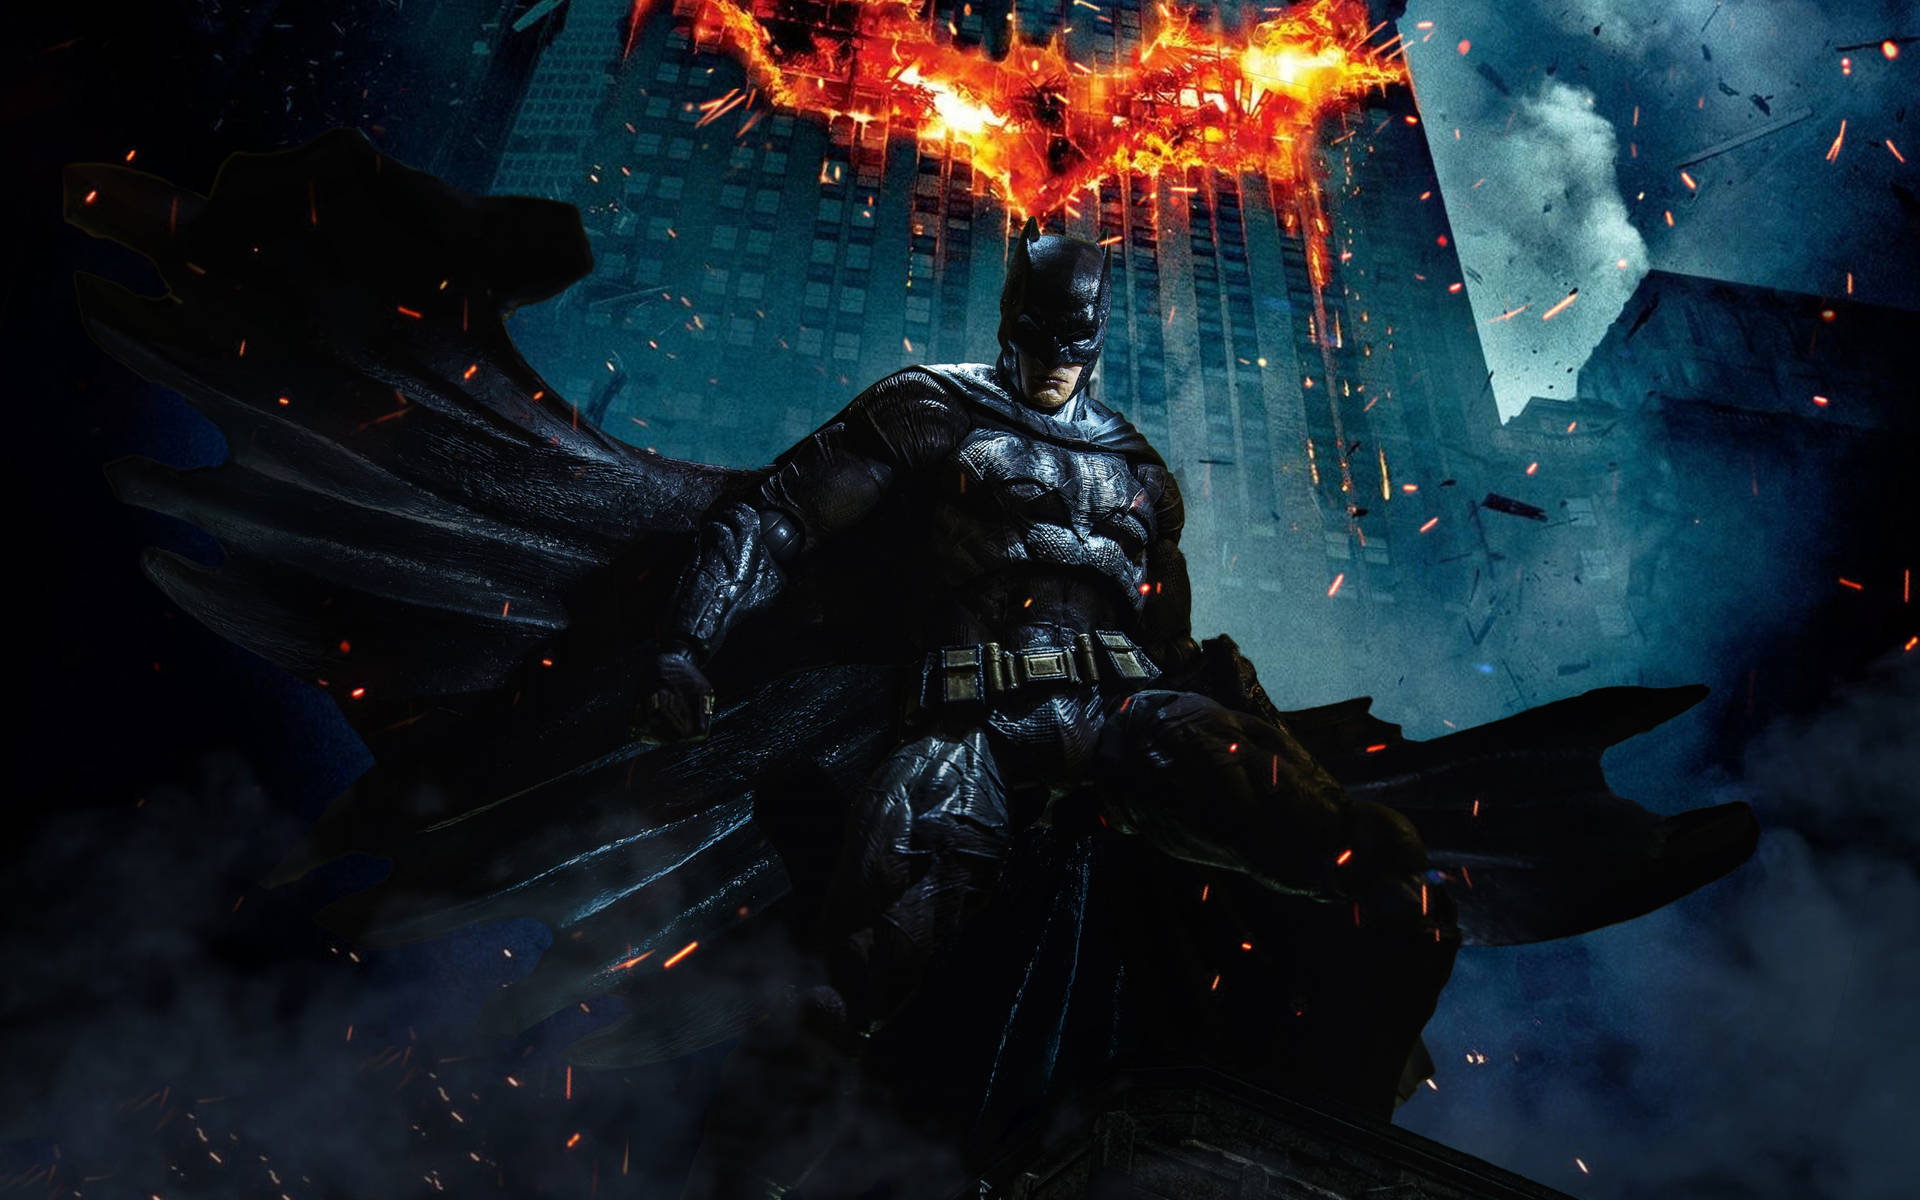 The Dark Knight Film Poster